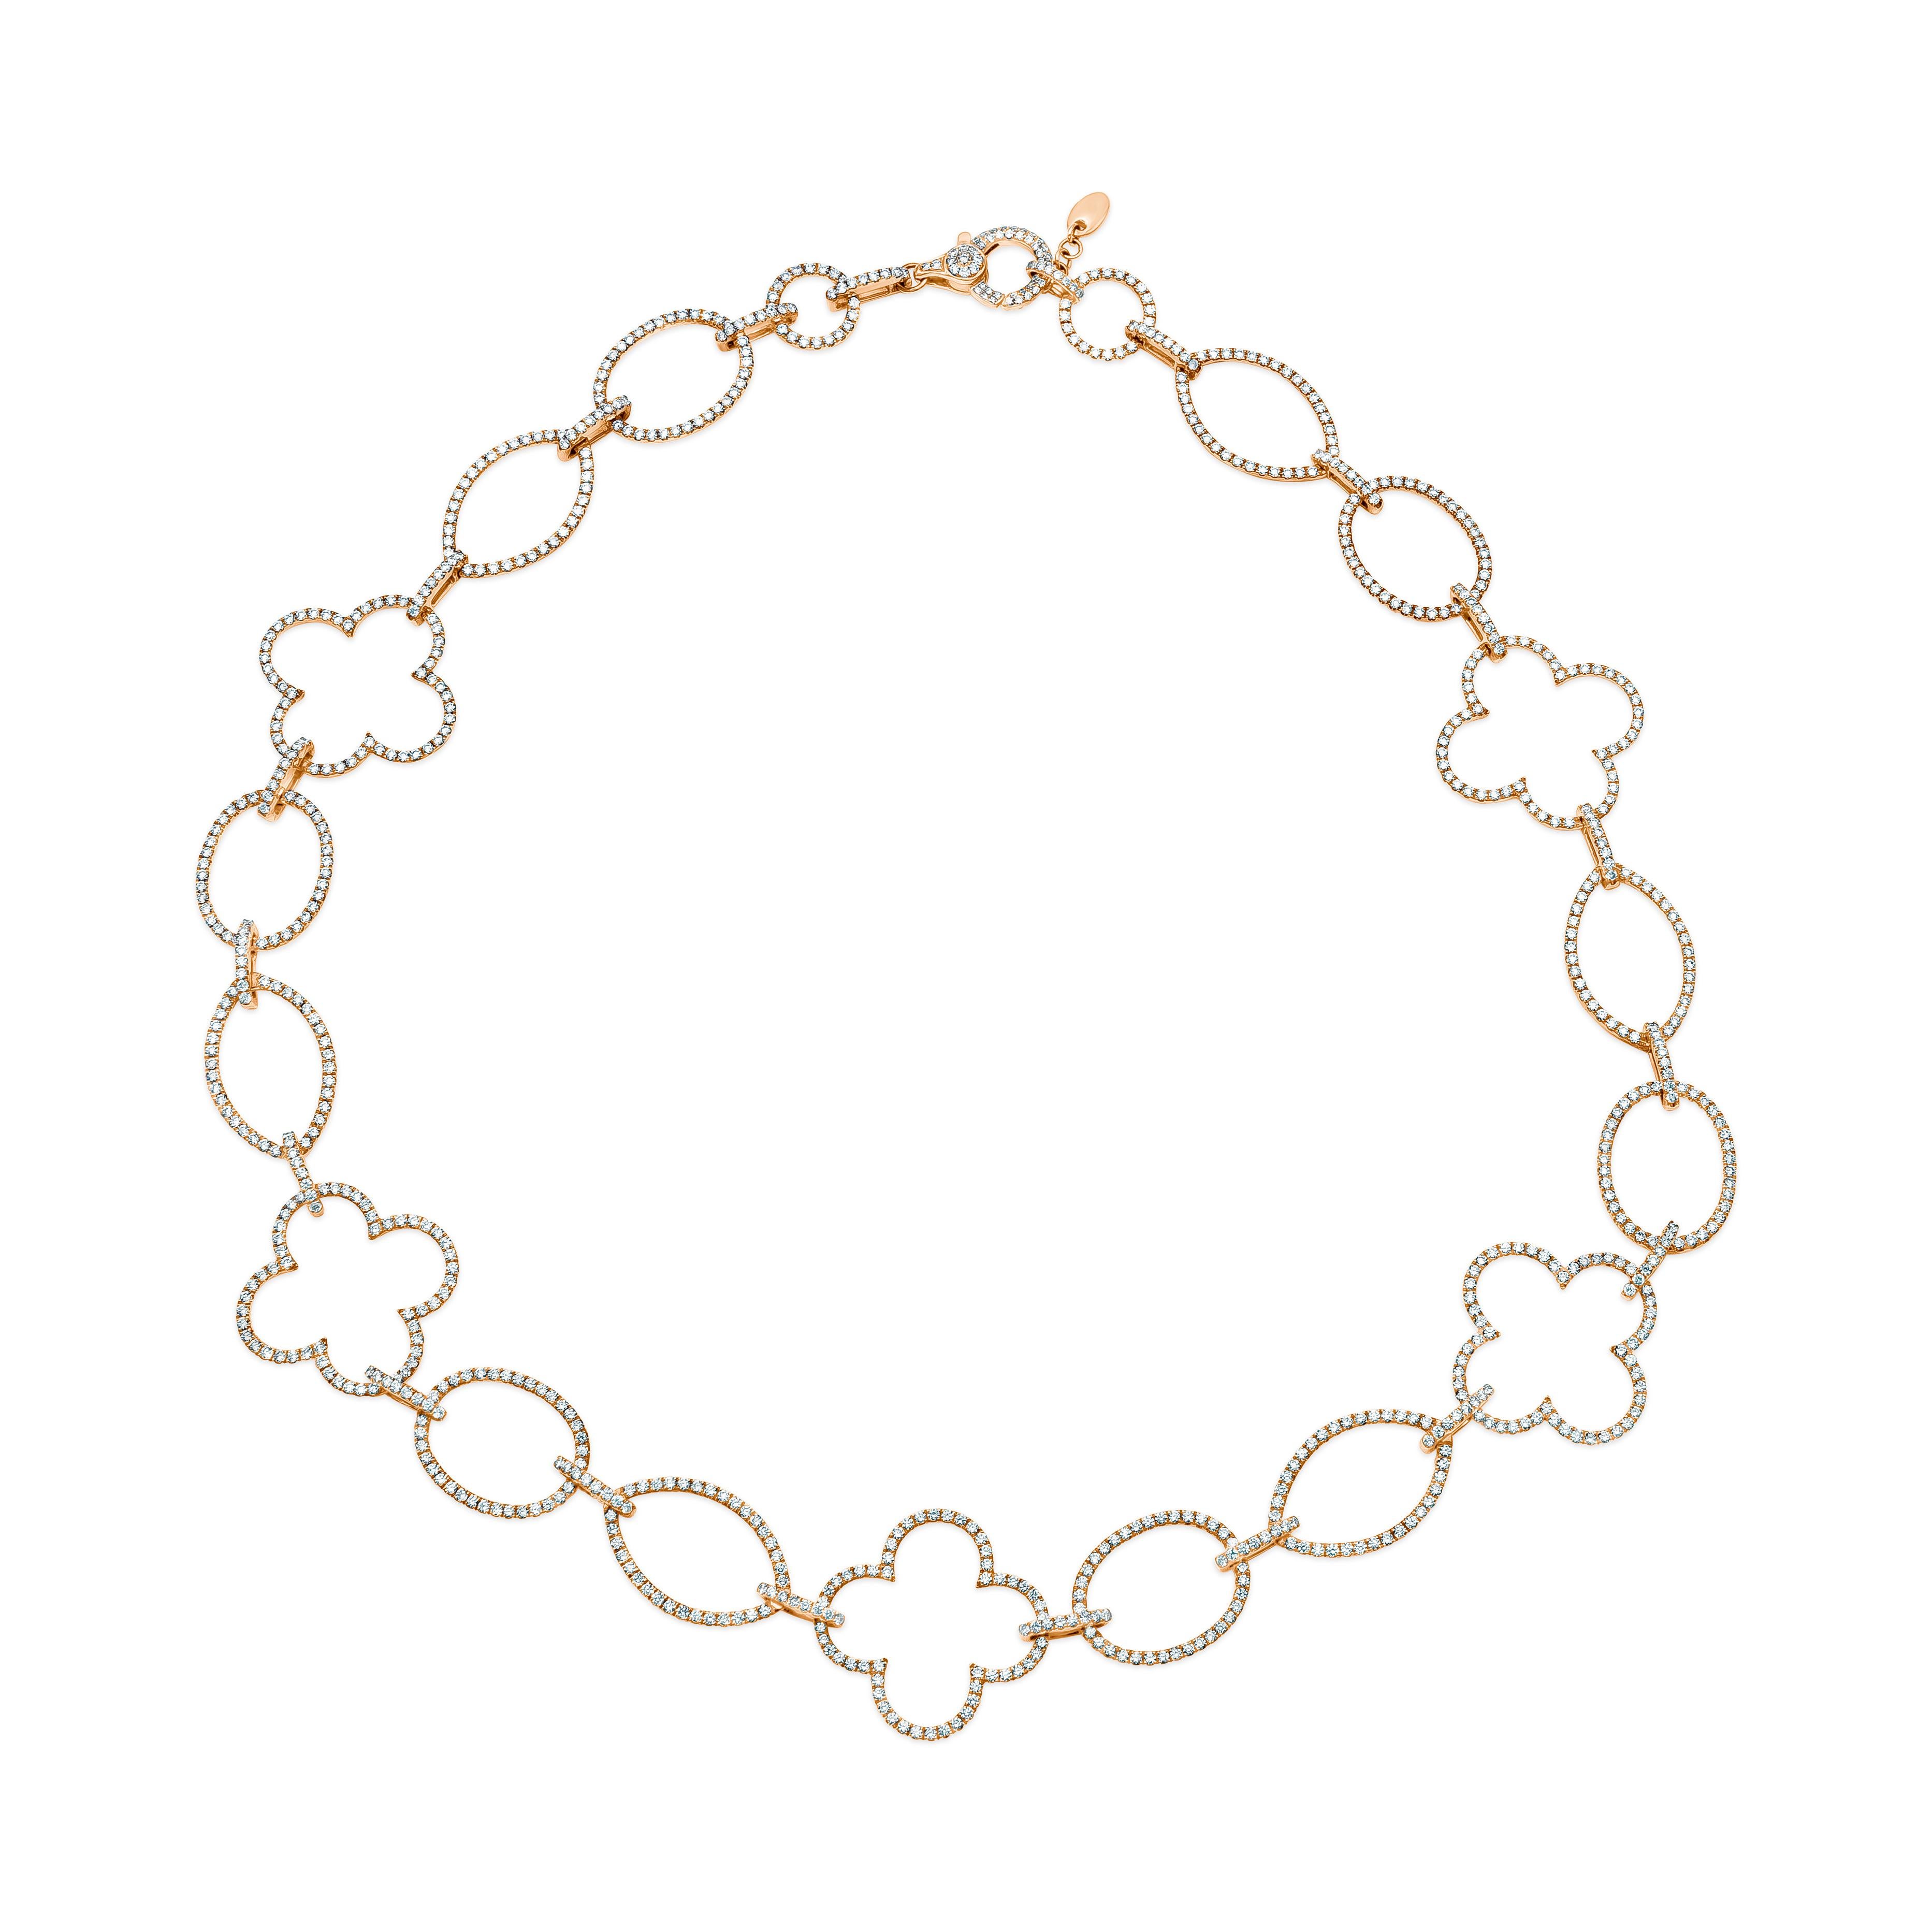 Contemporary Roman Malakov 6.67 Carat Total Round Diamond in Open Work Design Necklace For Sale